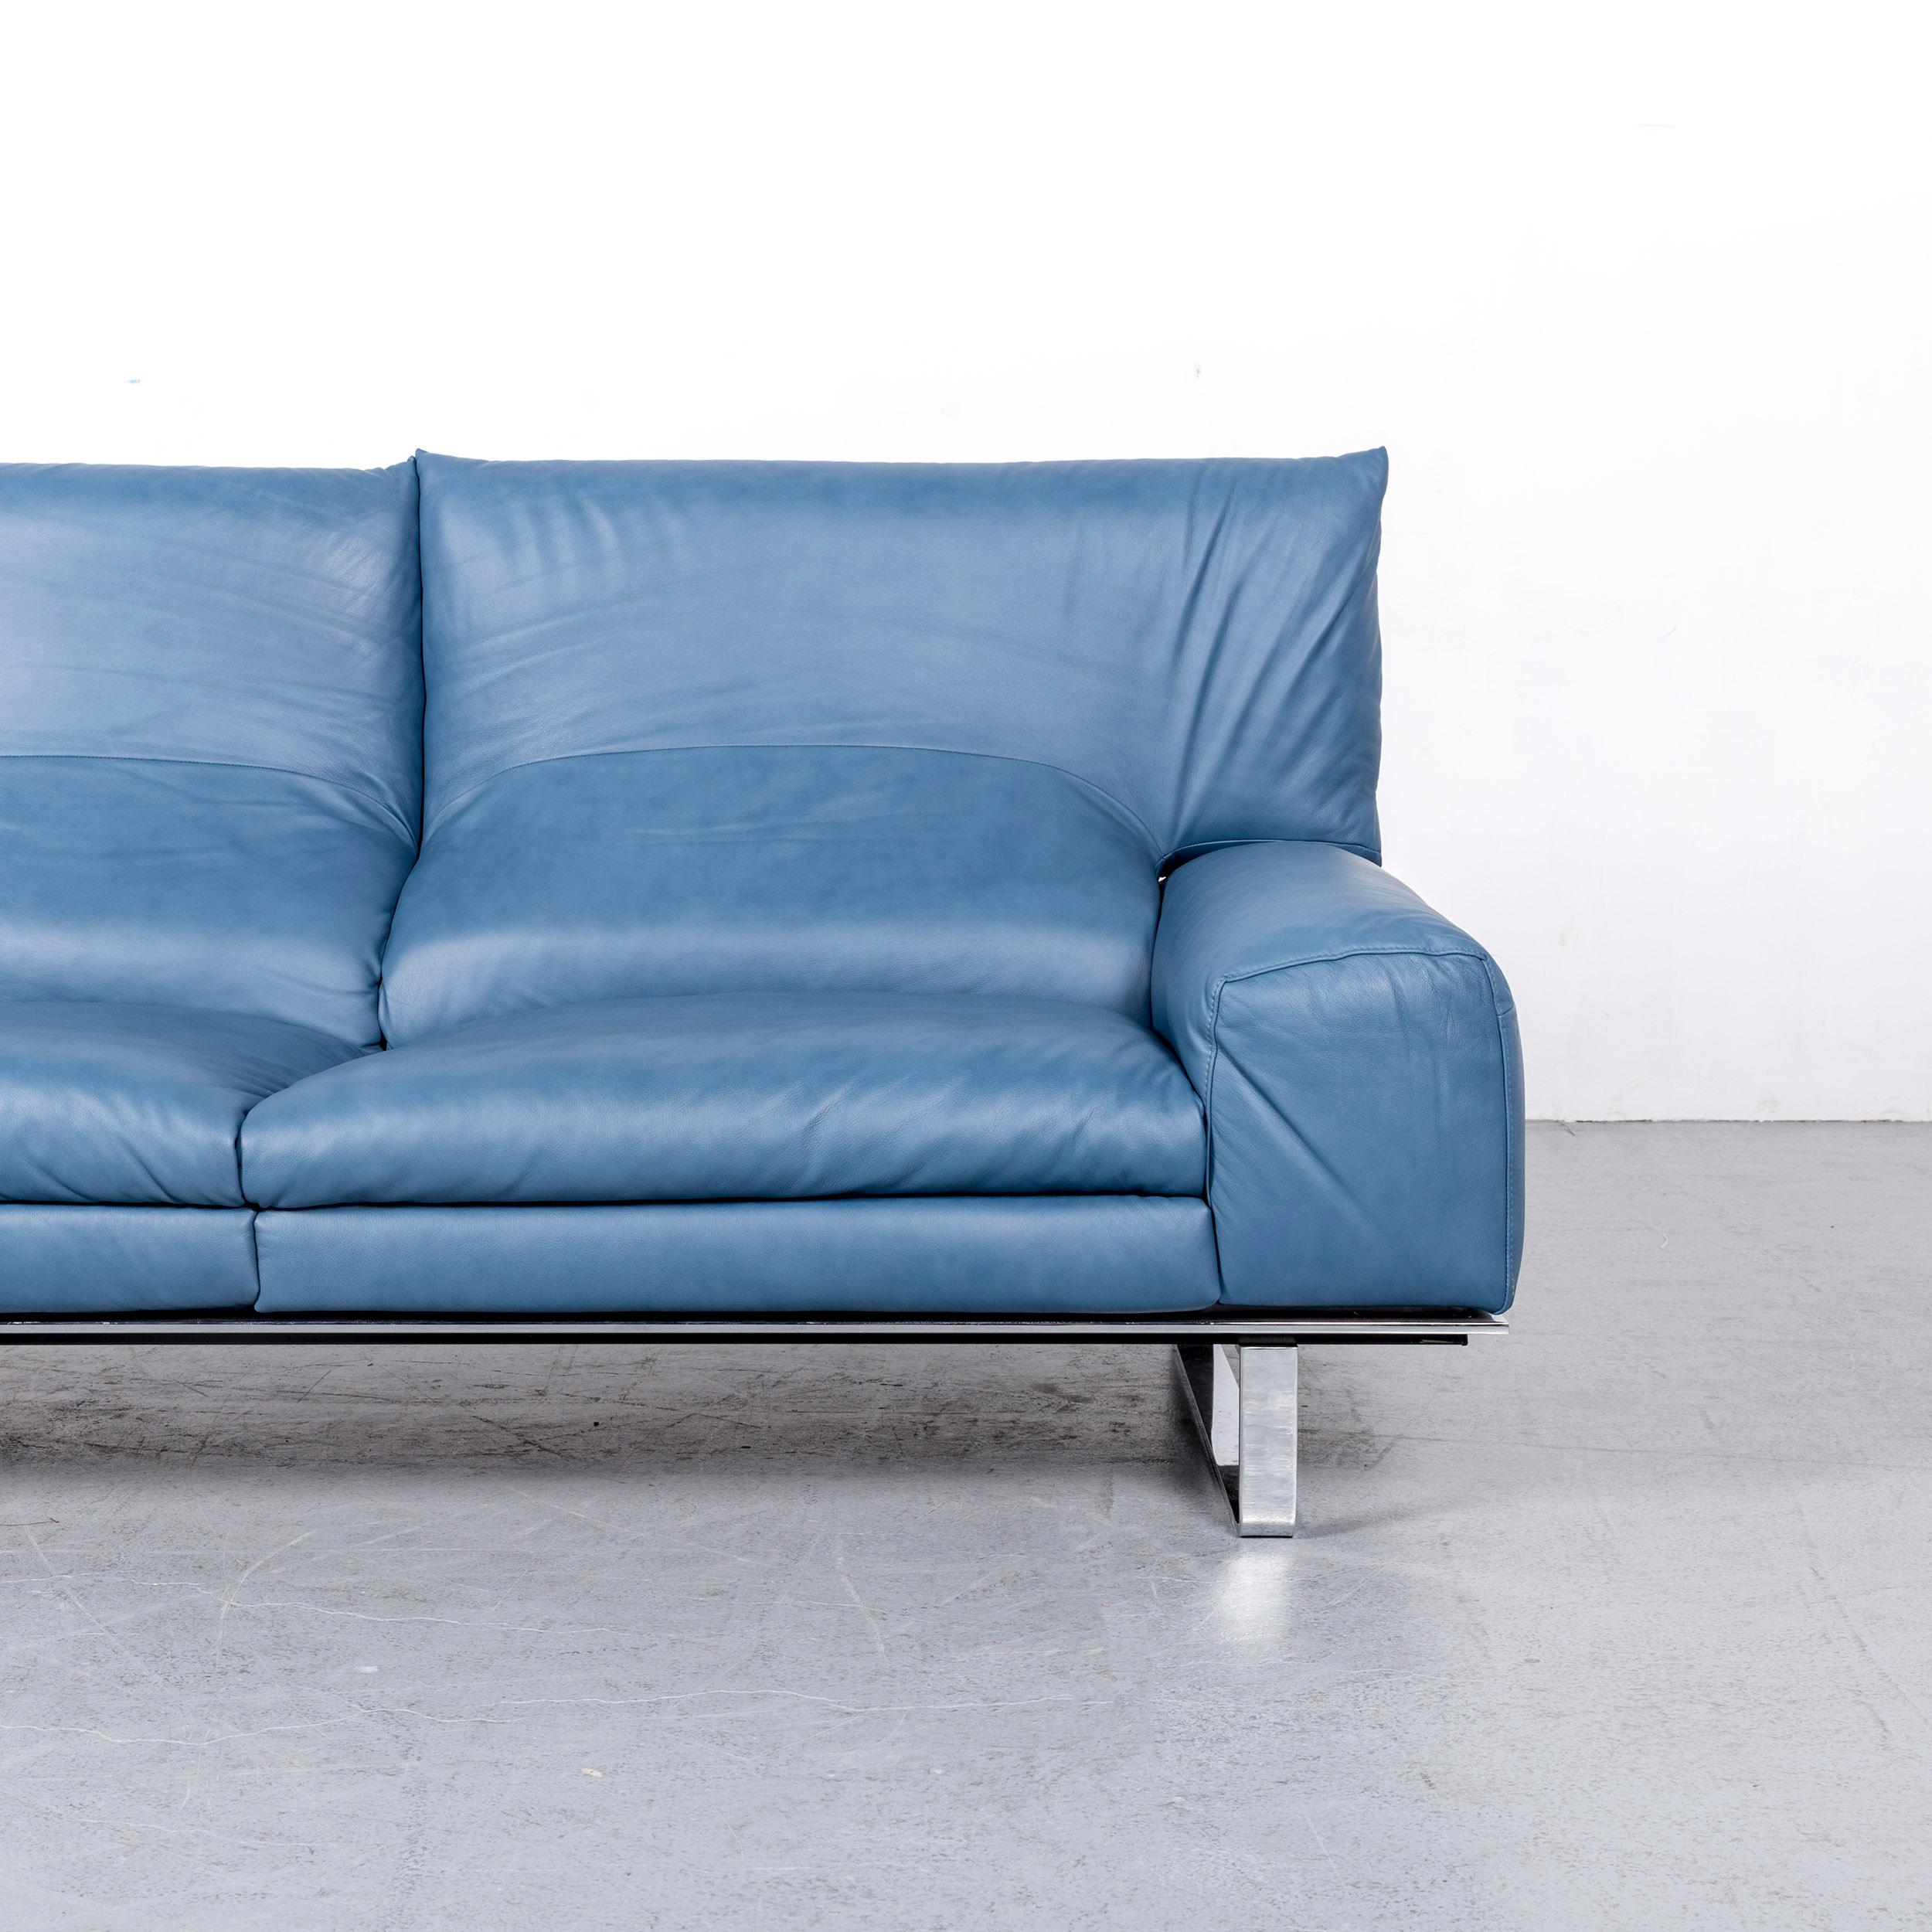 Contemporary Ewald Schillig Designer Sofa Leather Blue Three-Seat Couch Modern